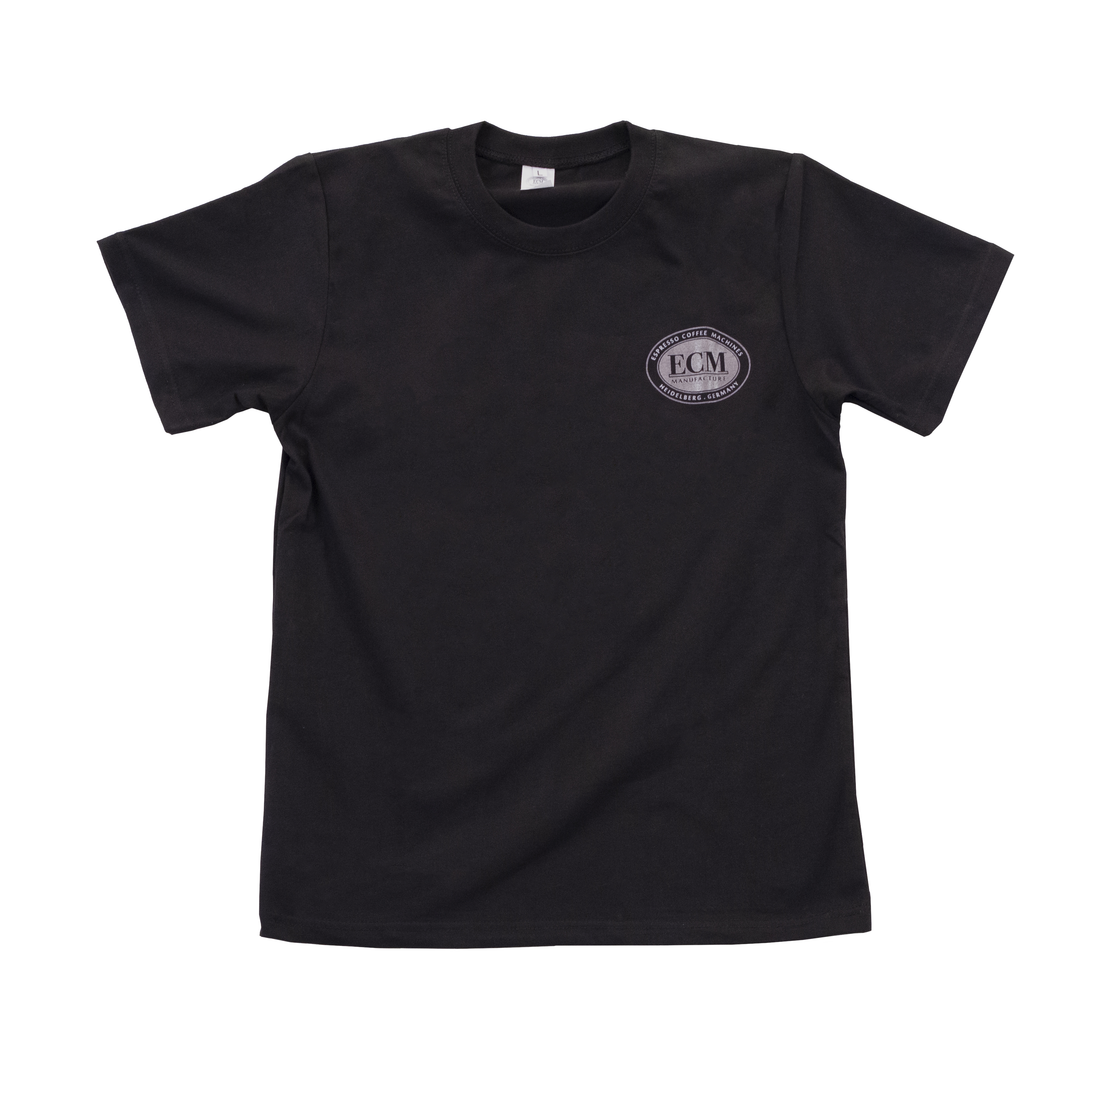 ECM Black Logo T-Shirt - Size L